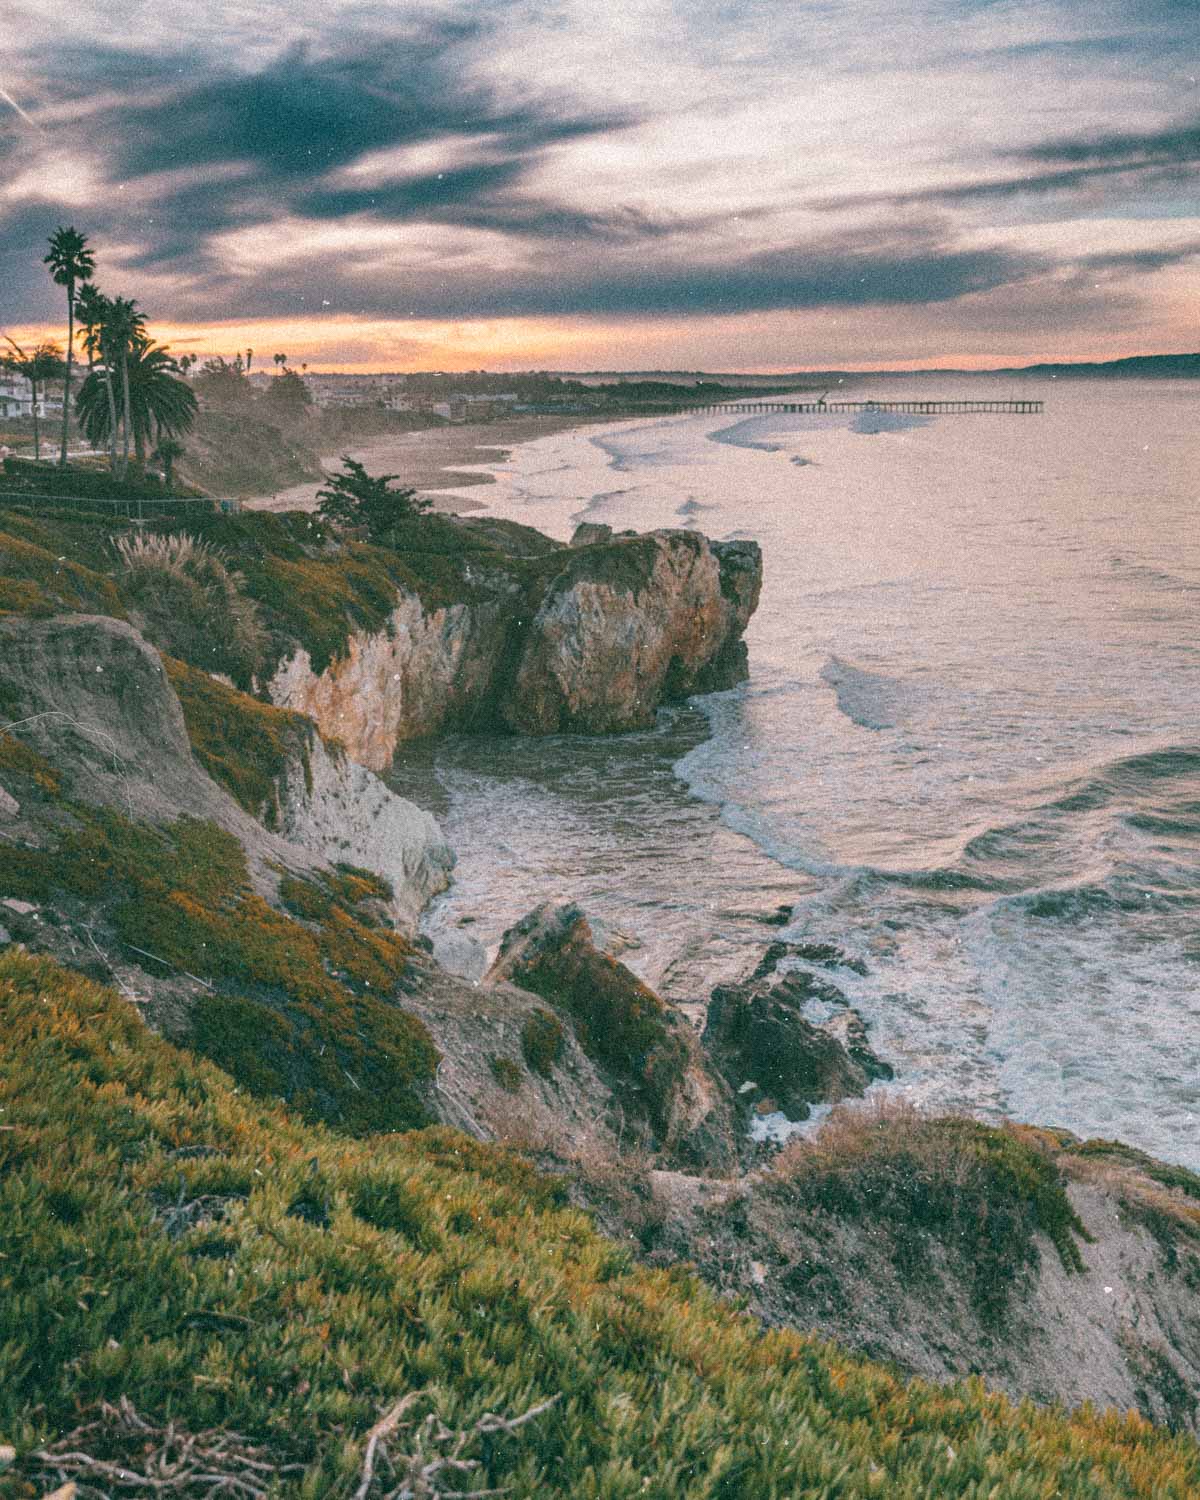 Pismo Beach, California, USA by Madeline Lu @lumadeline